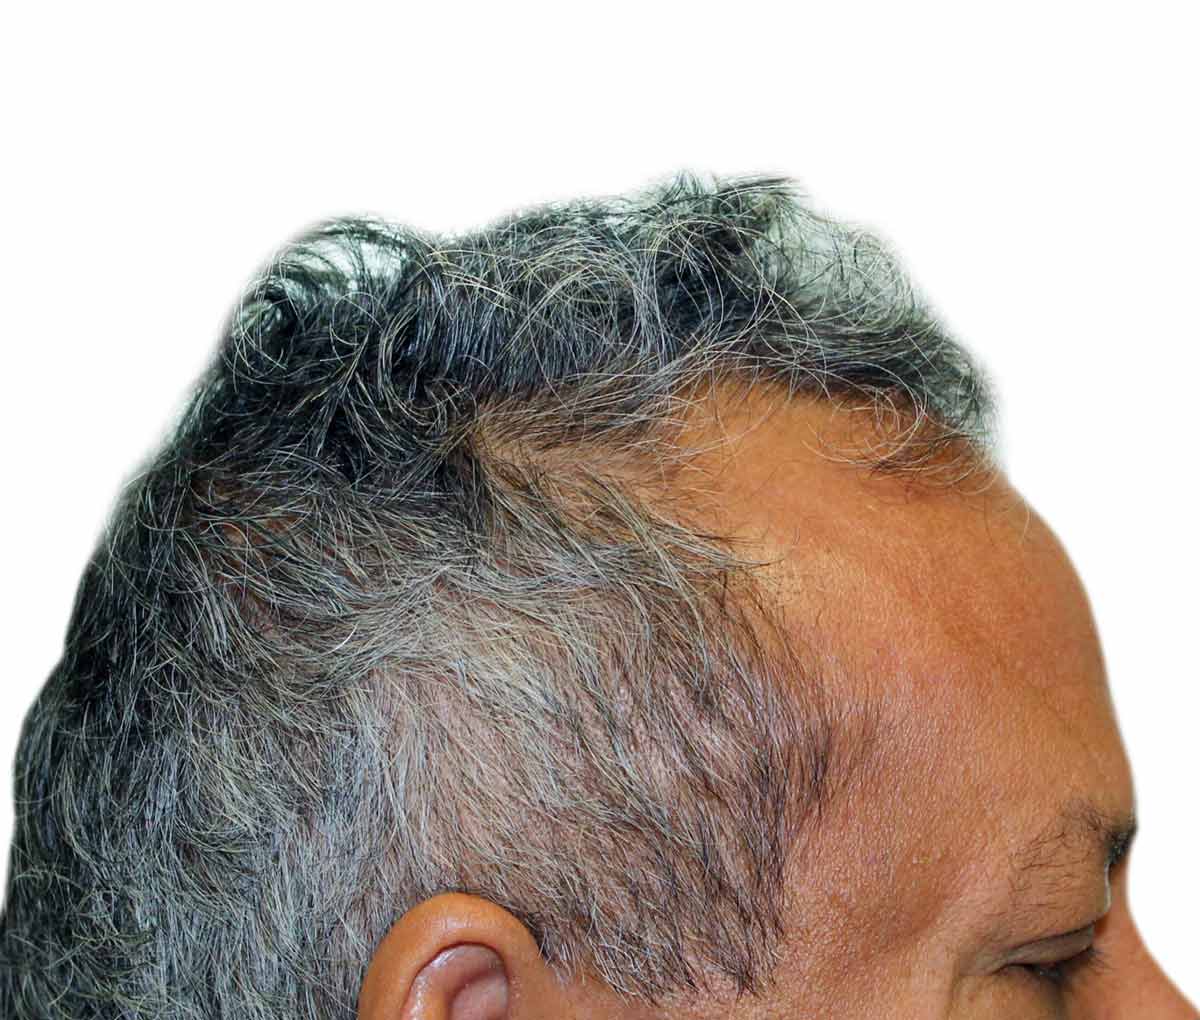 a close up of a man 's head with gray hair on a white background .